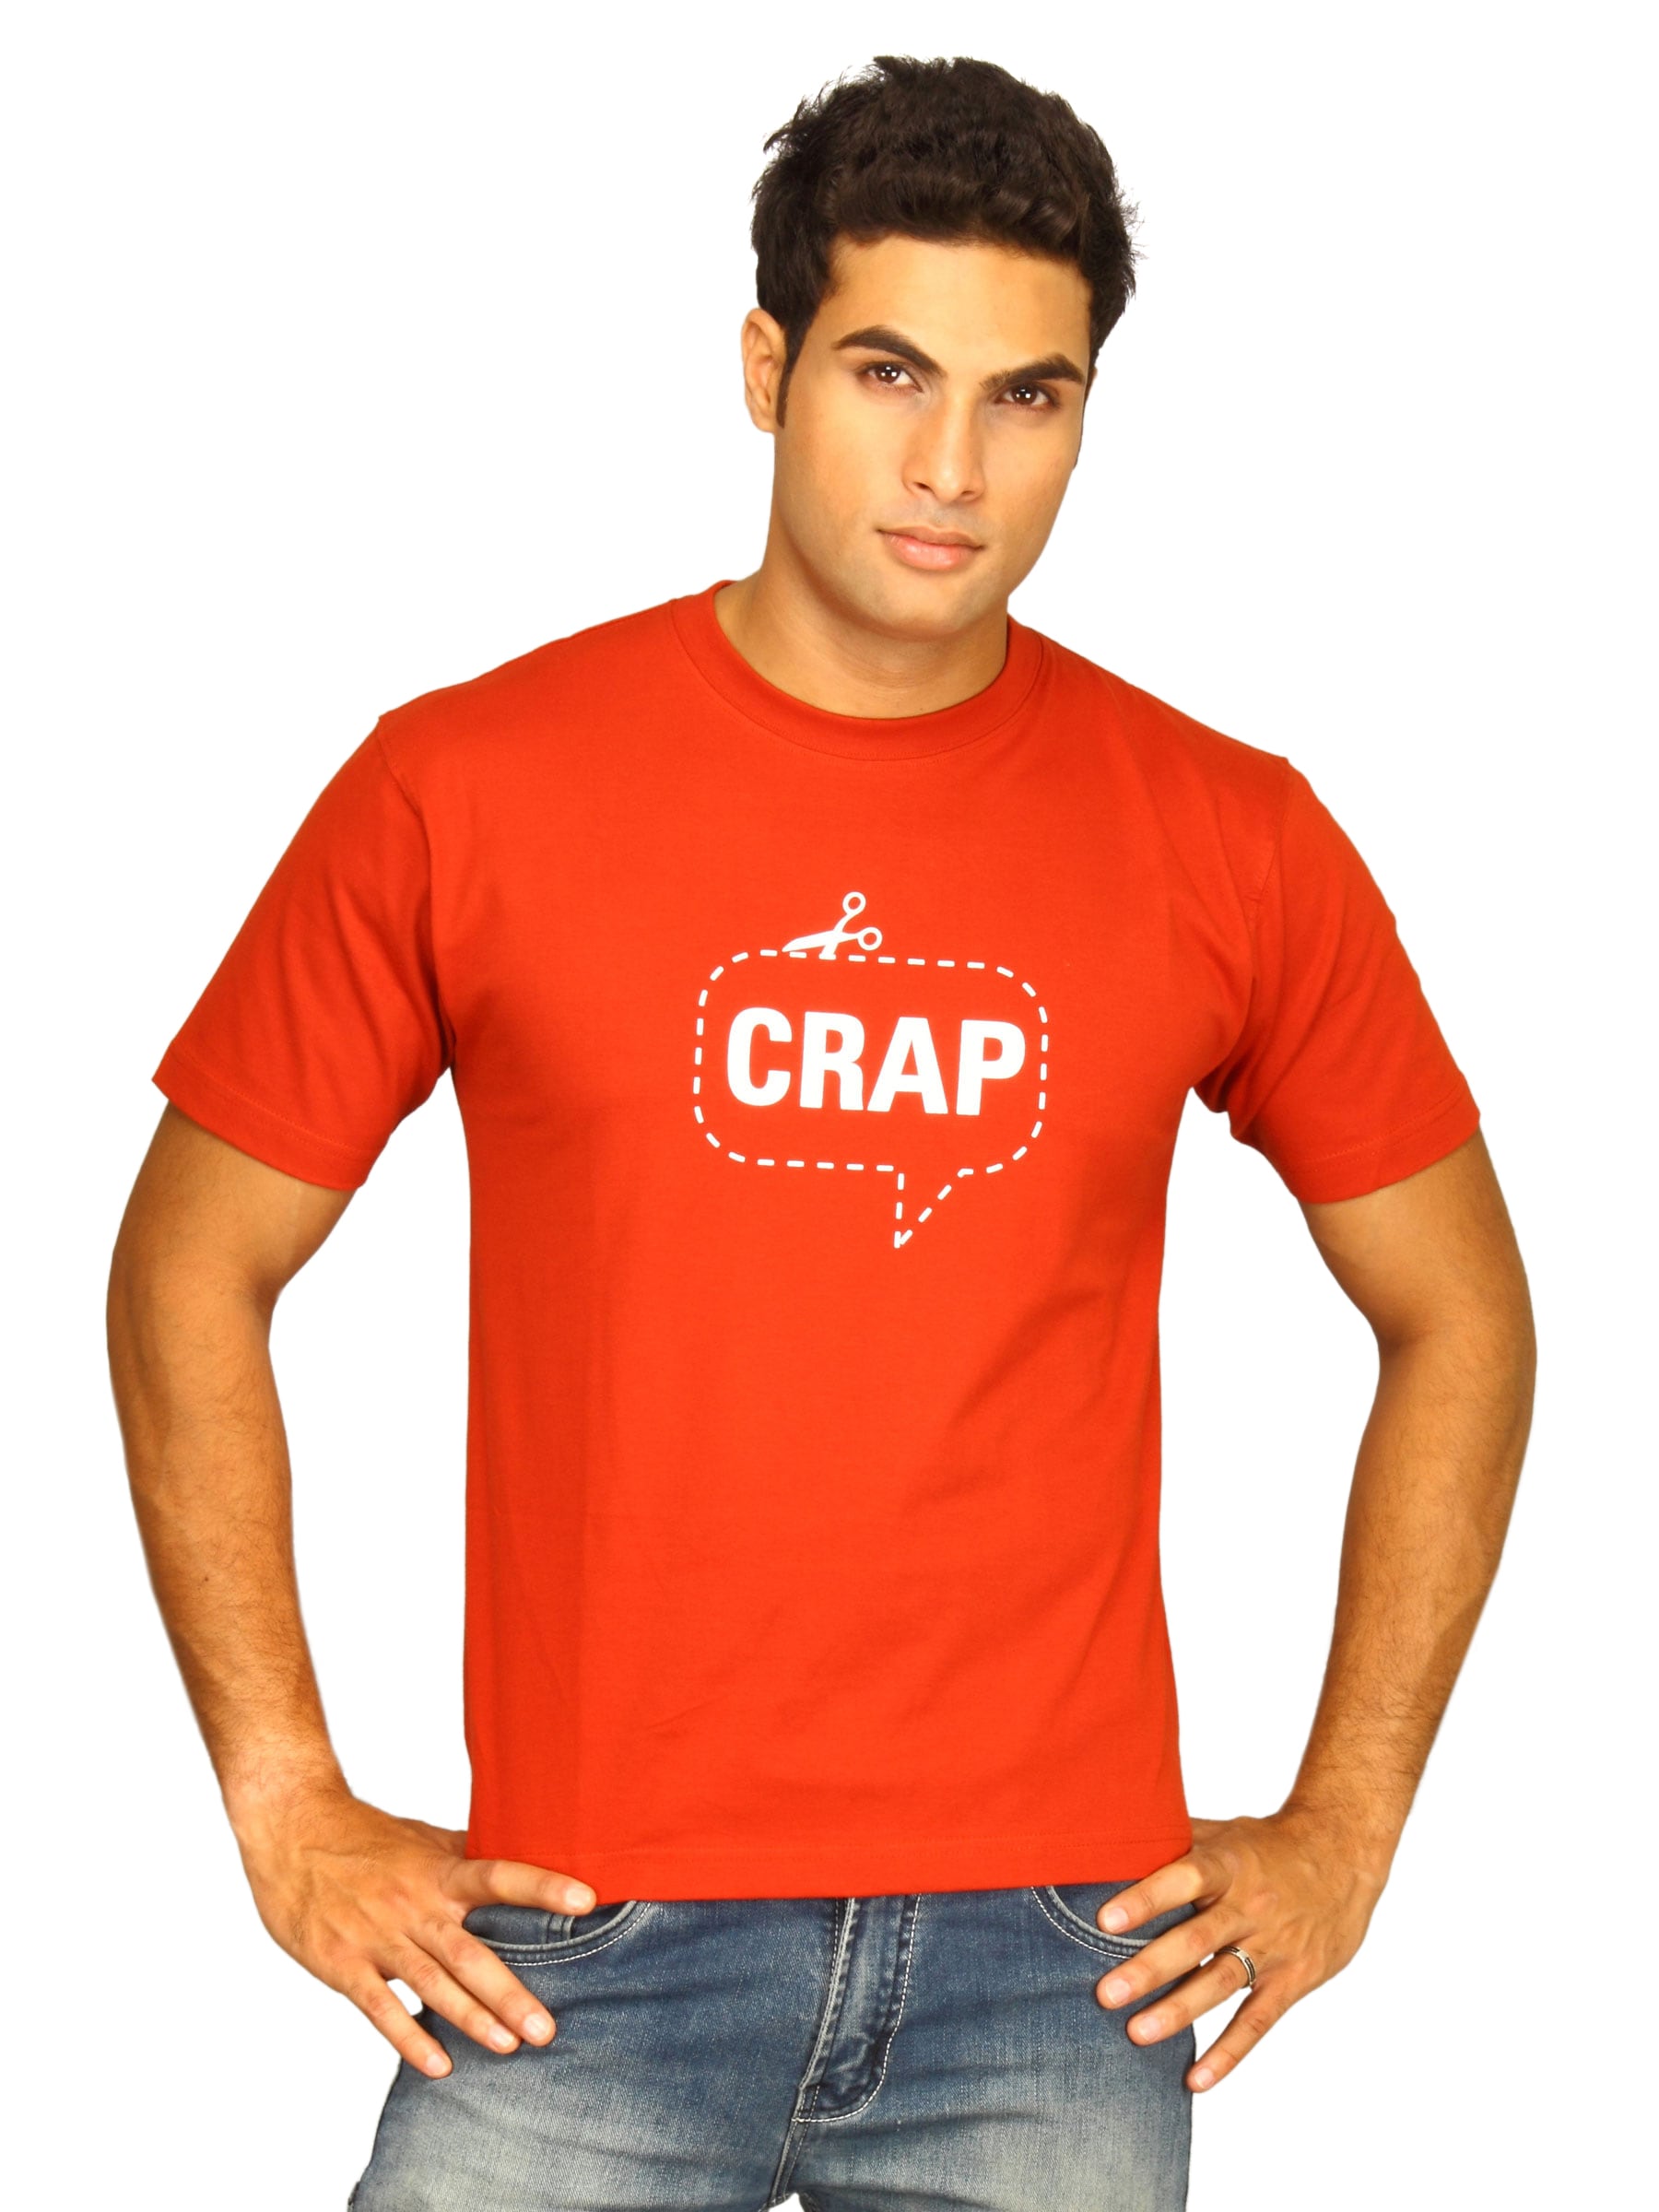 Tantra Men's Cut The Crap Red T-shirt